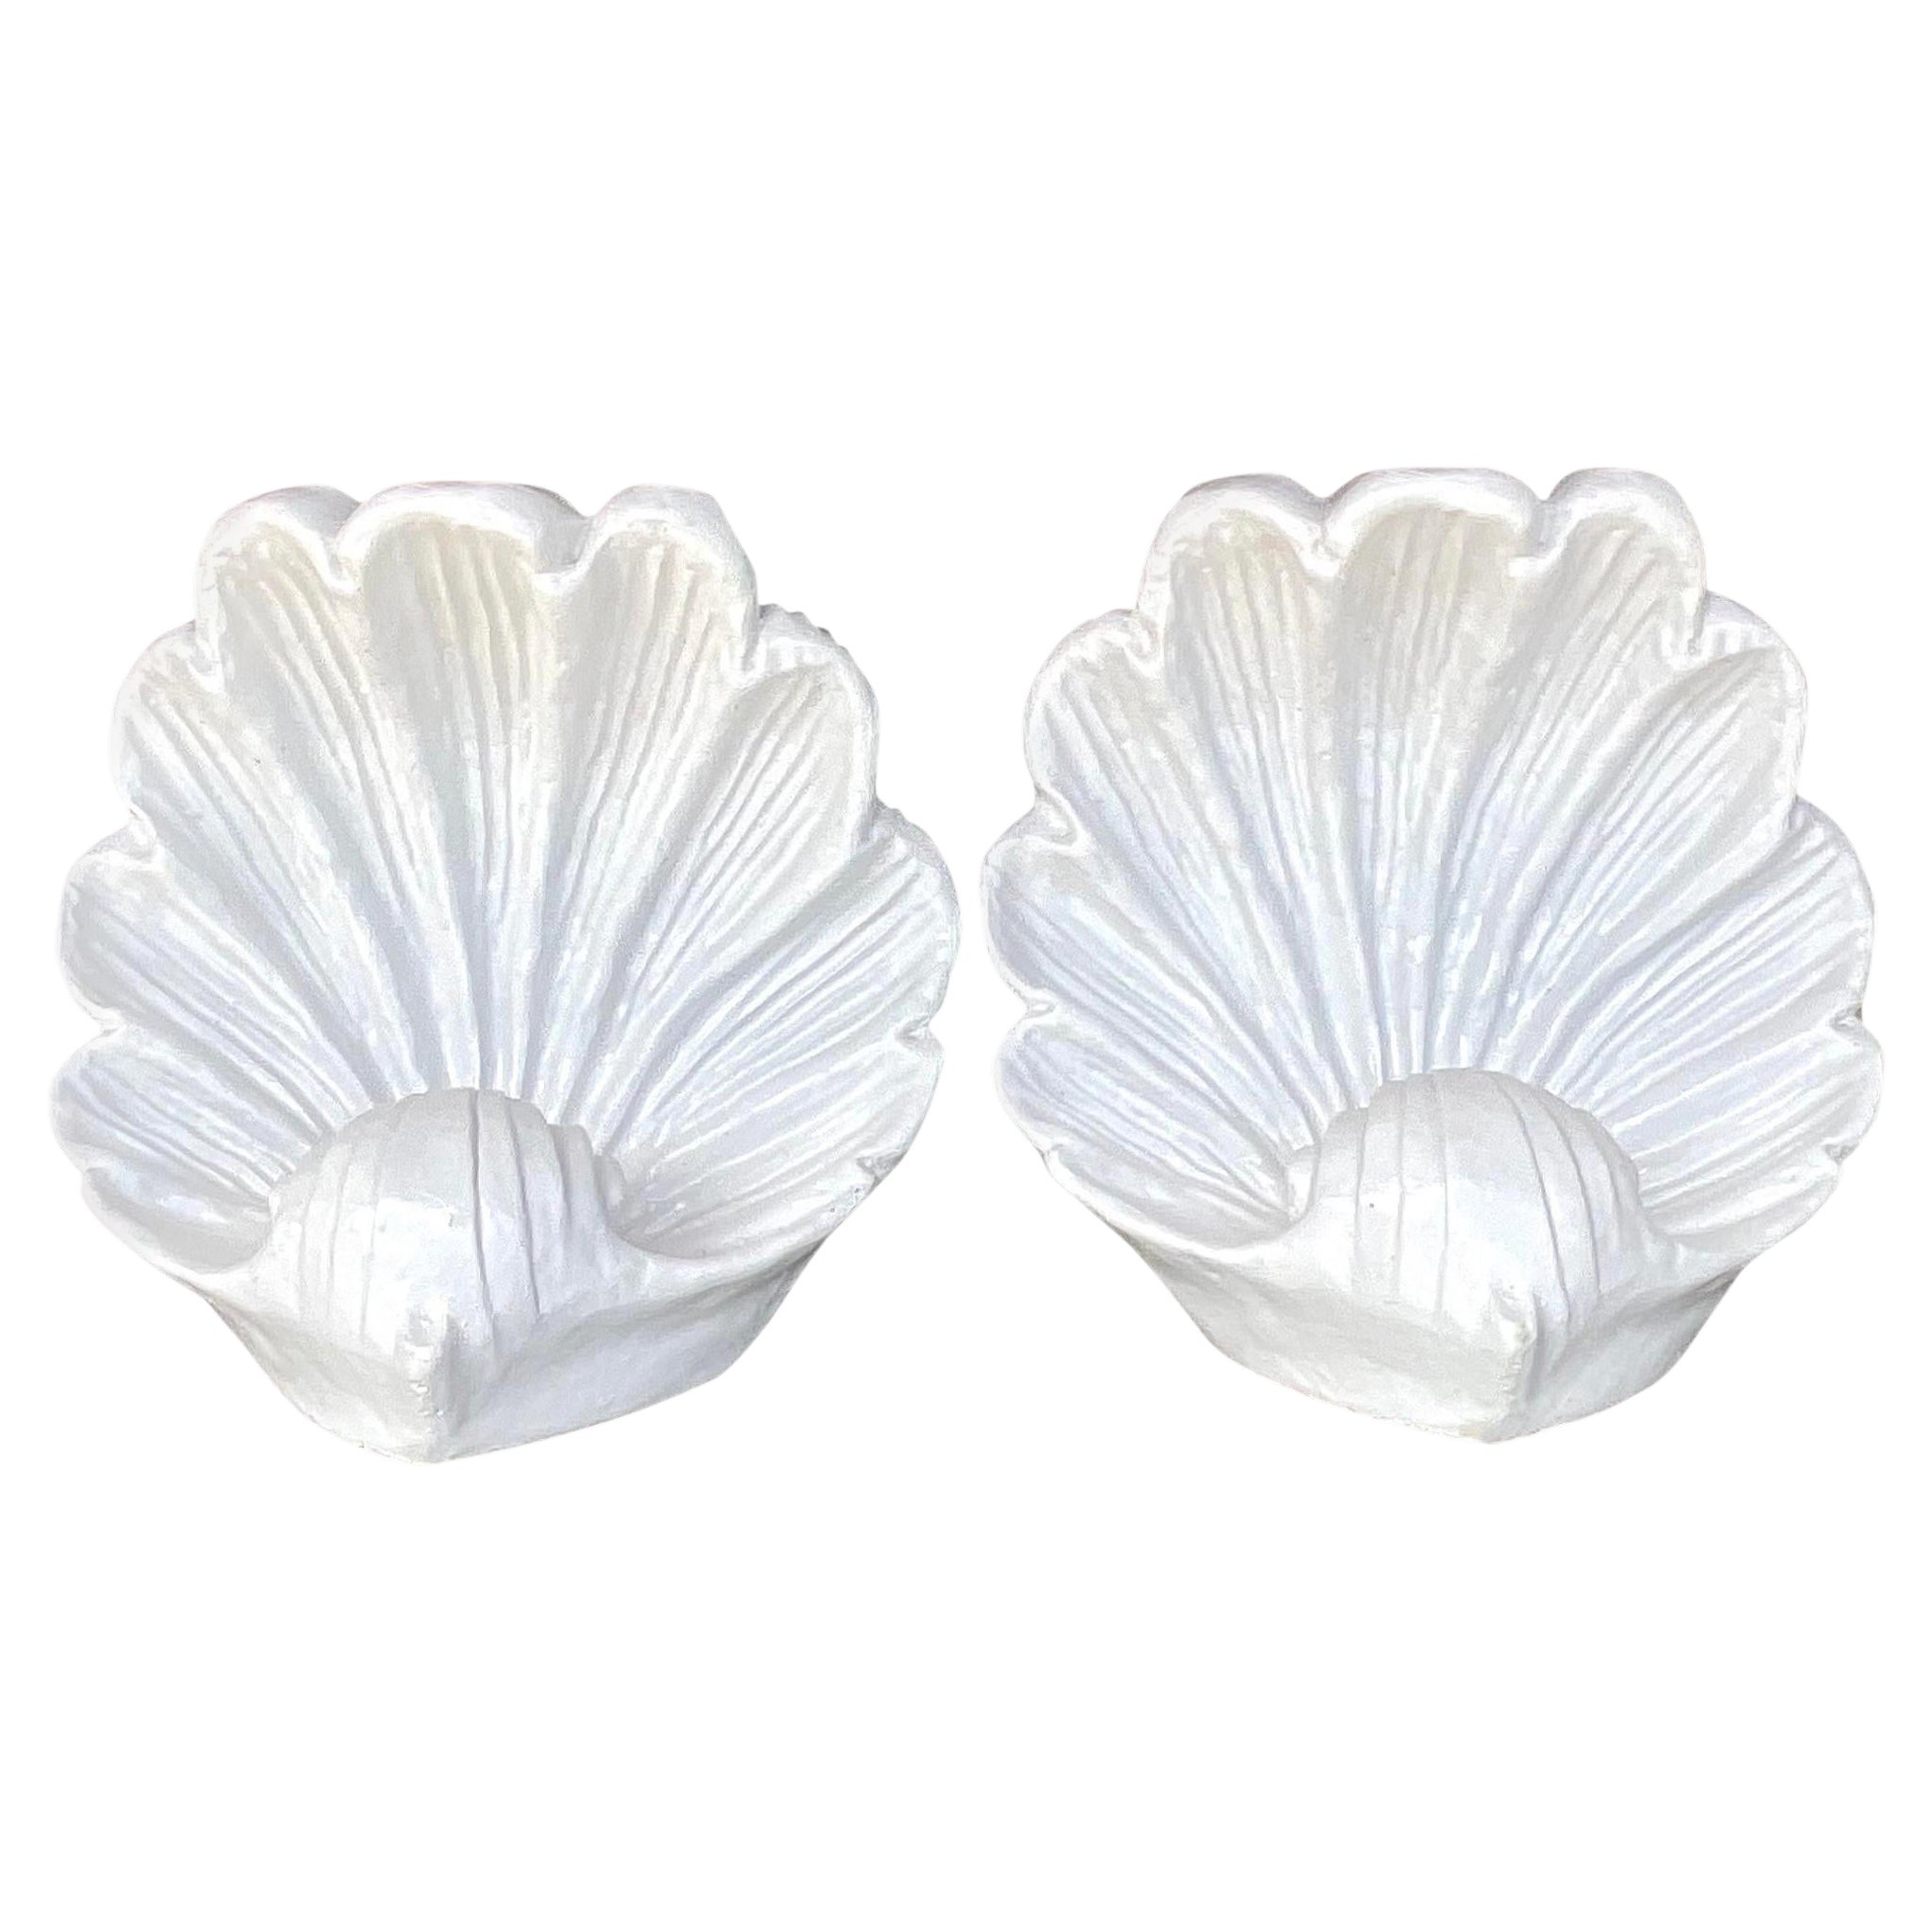 Vintage Coastal Glazed Ceramic Clam Shells - a Pair For Sale